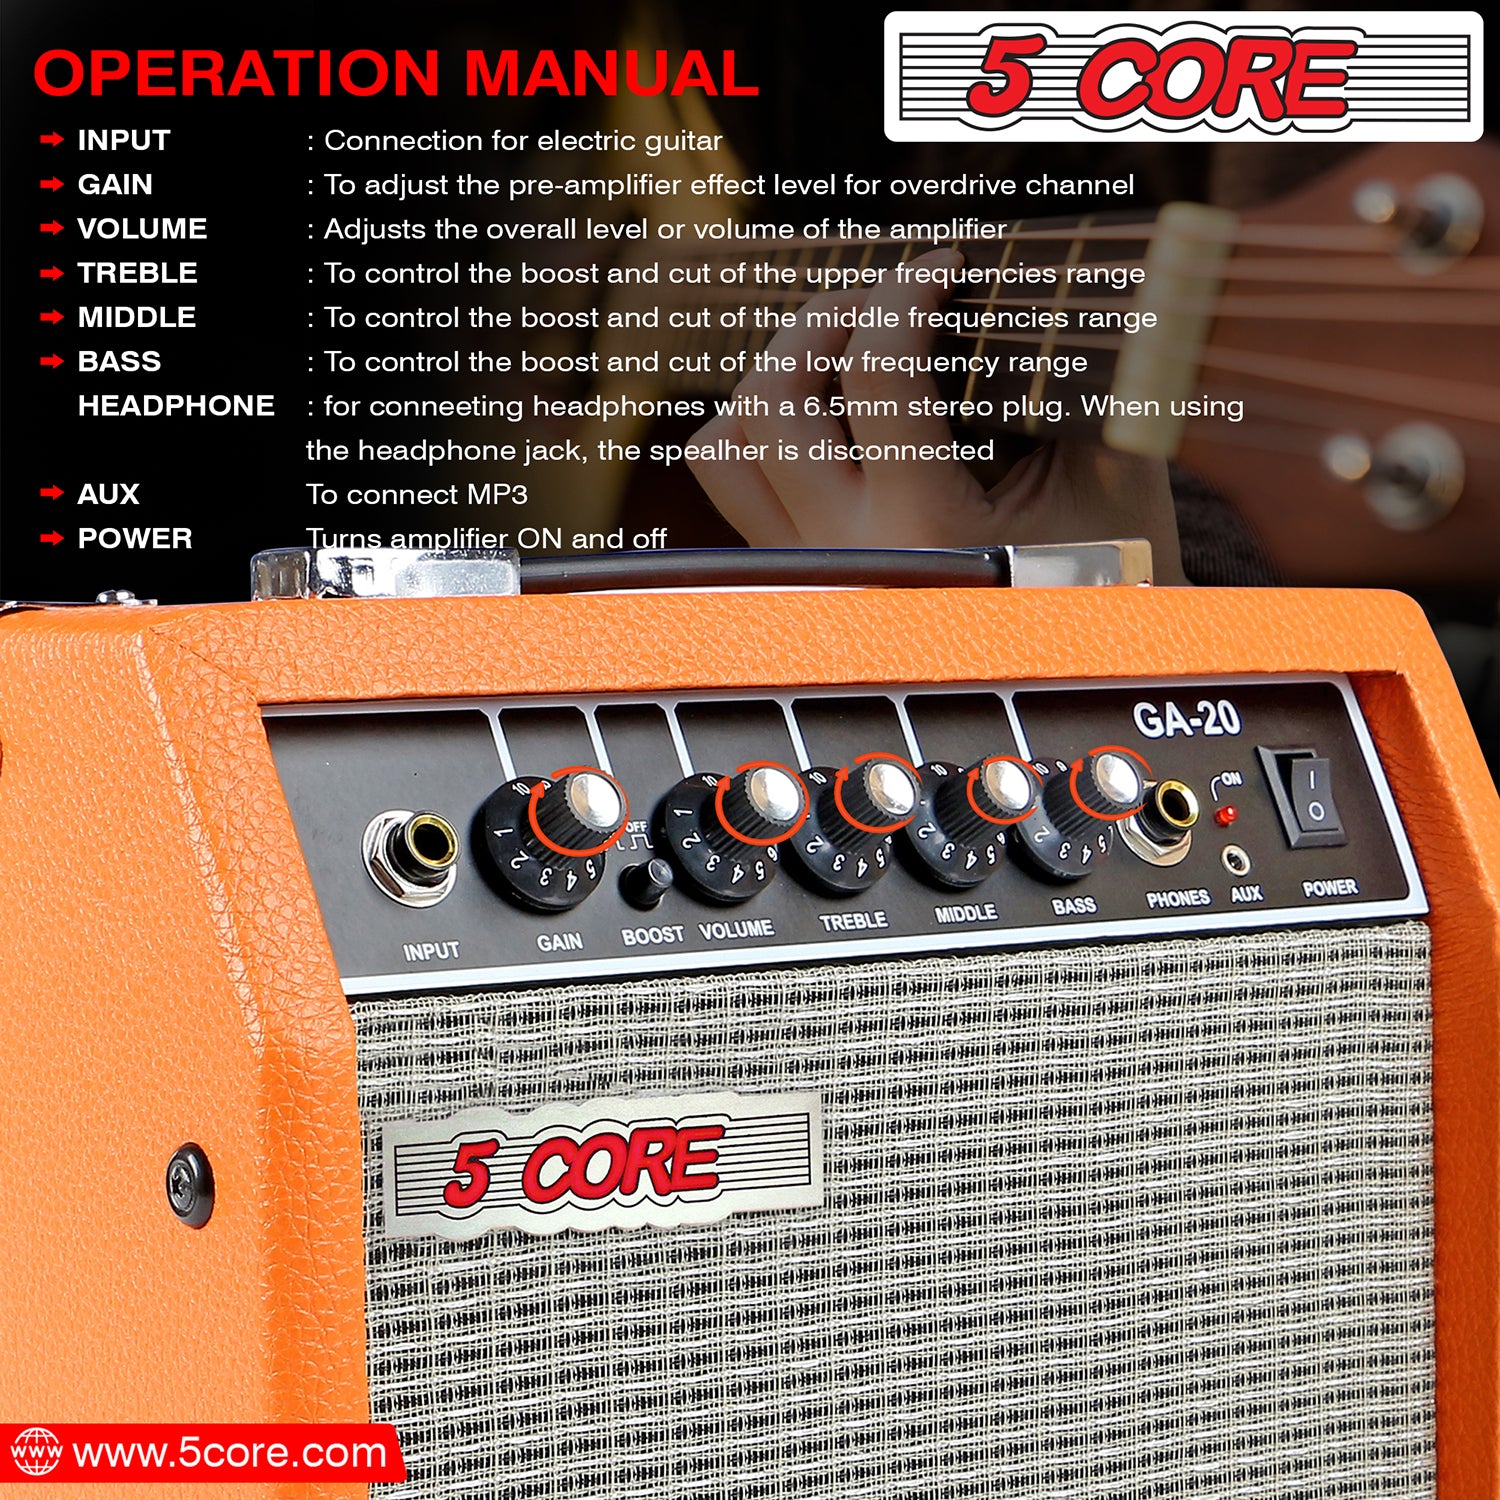 5 Core Mini Guitar Amp Orange 20W Portable Electric Bass Amplifier w 6.5” 4 Ohm Speaker w EQ Control